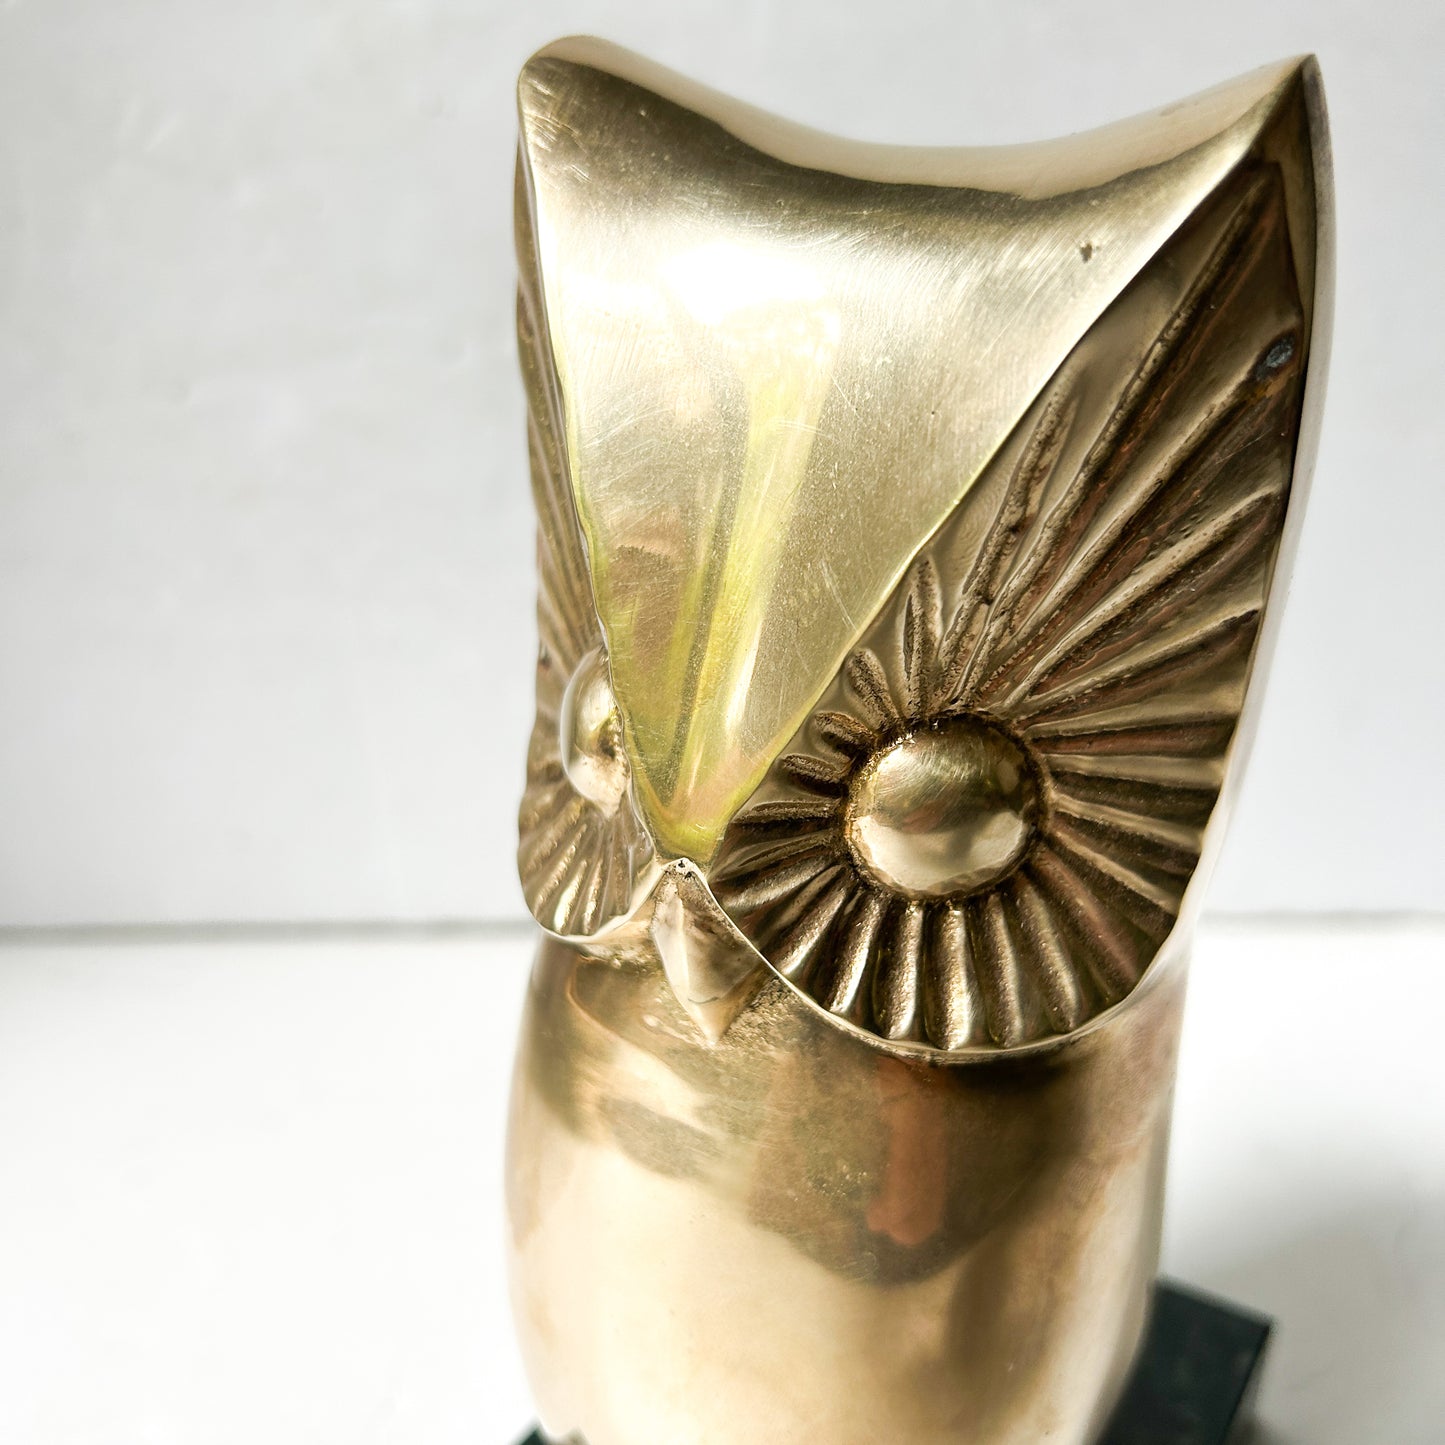 Vintage brass owl sculpture on green marble base